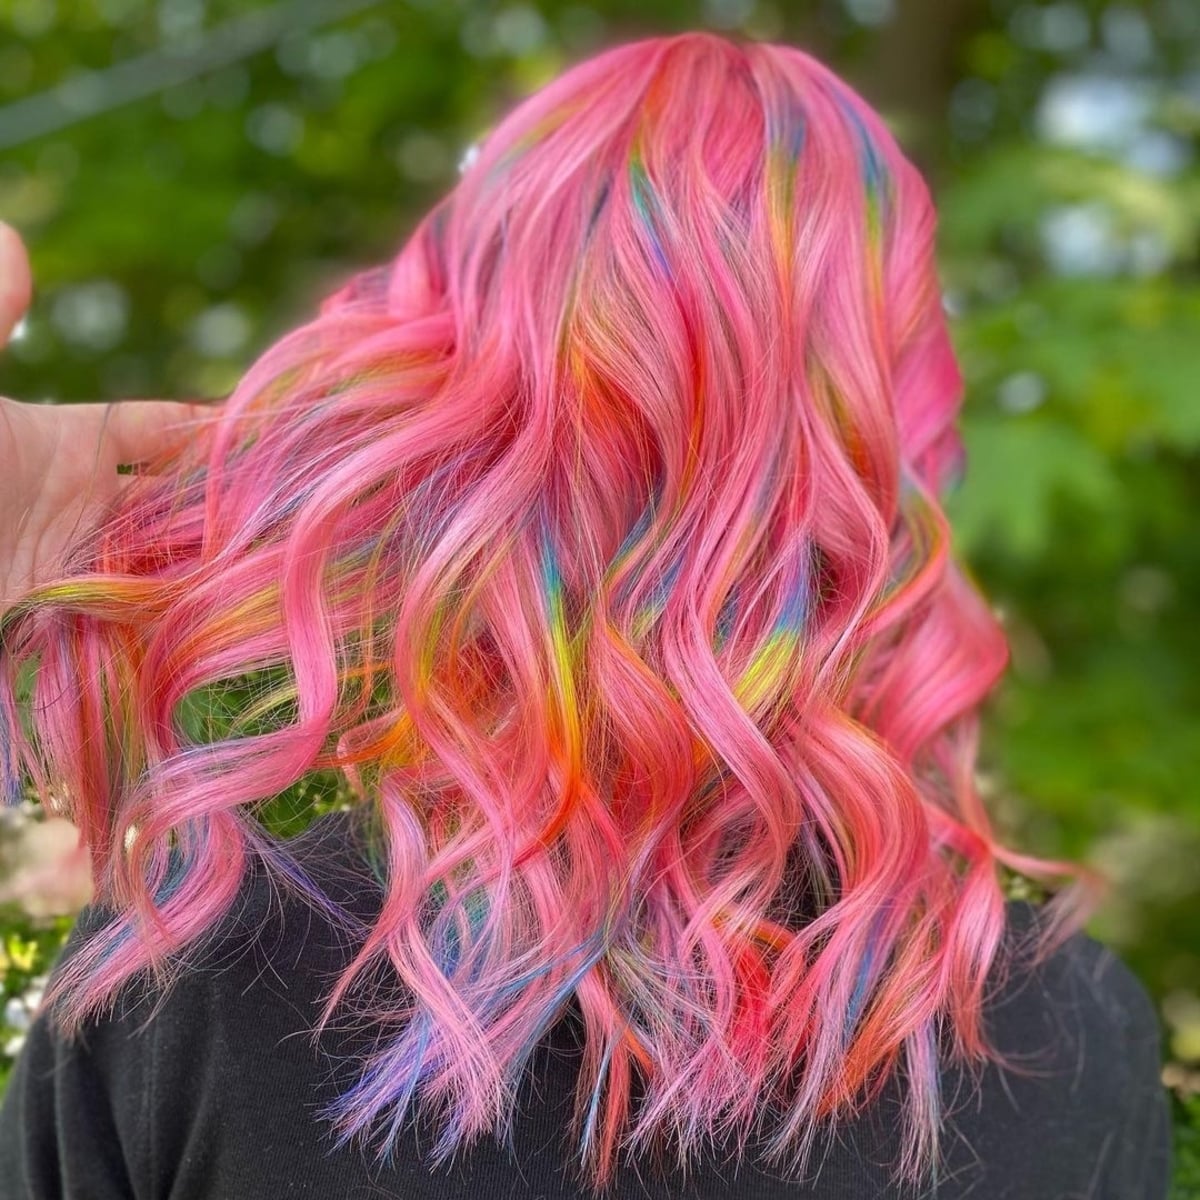 Hints of rainbow on pink hair